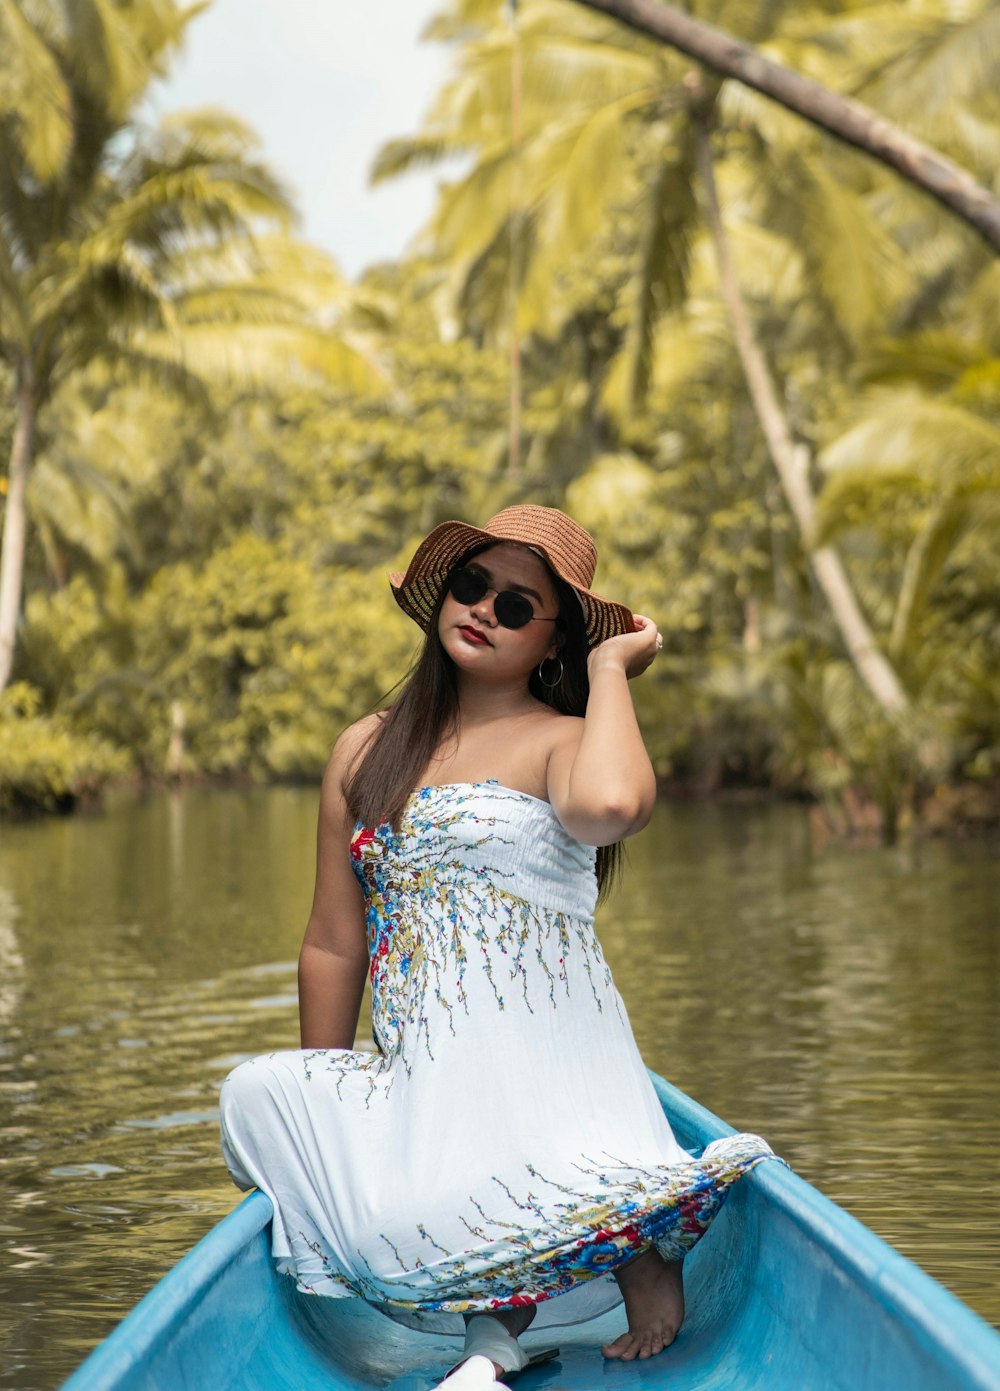 woman in white dress wearing black sunglasses sitting on blue hammock near body of water during